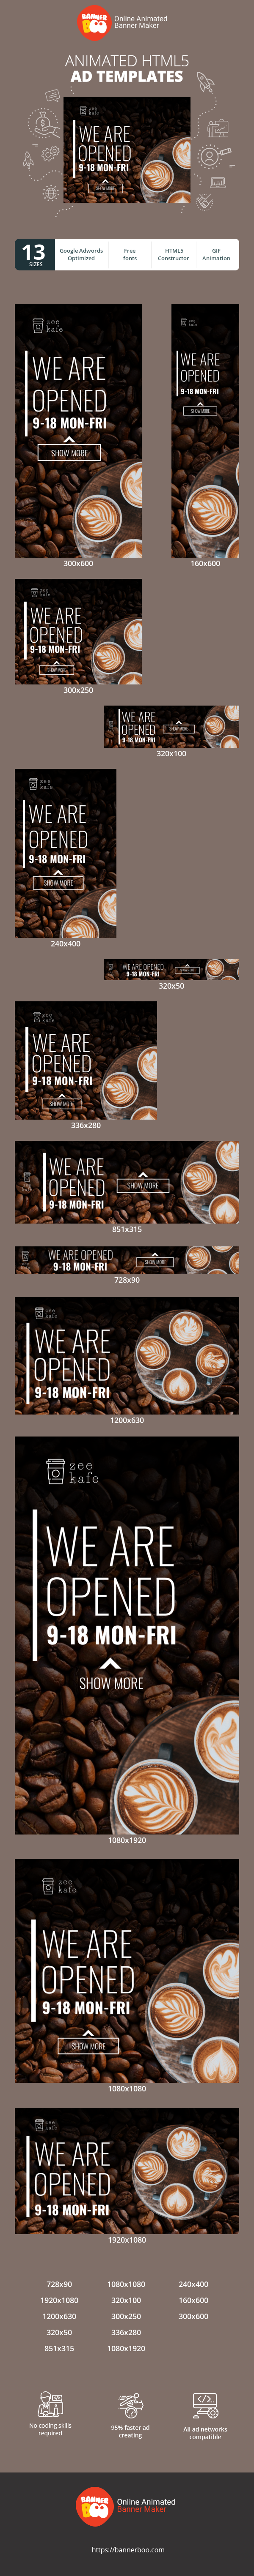 Szablon reklamy banerowej — We Are Opened — 9-18 Mon-Fri